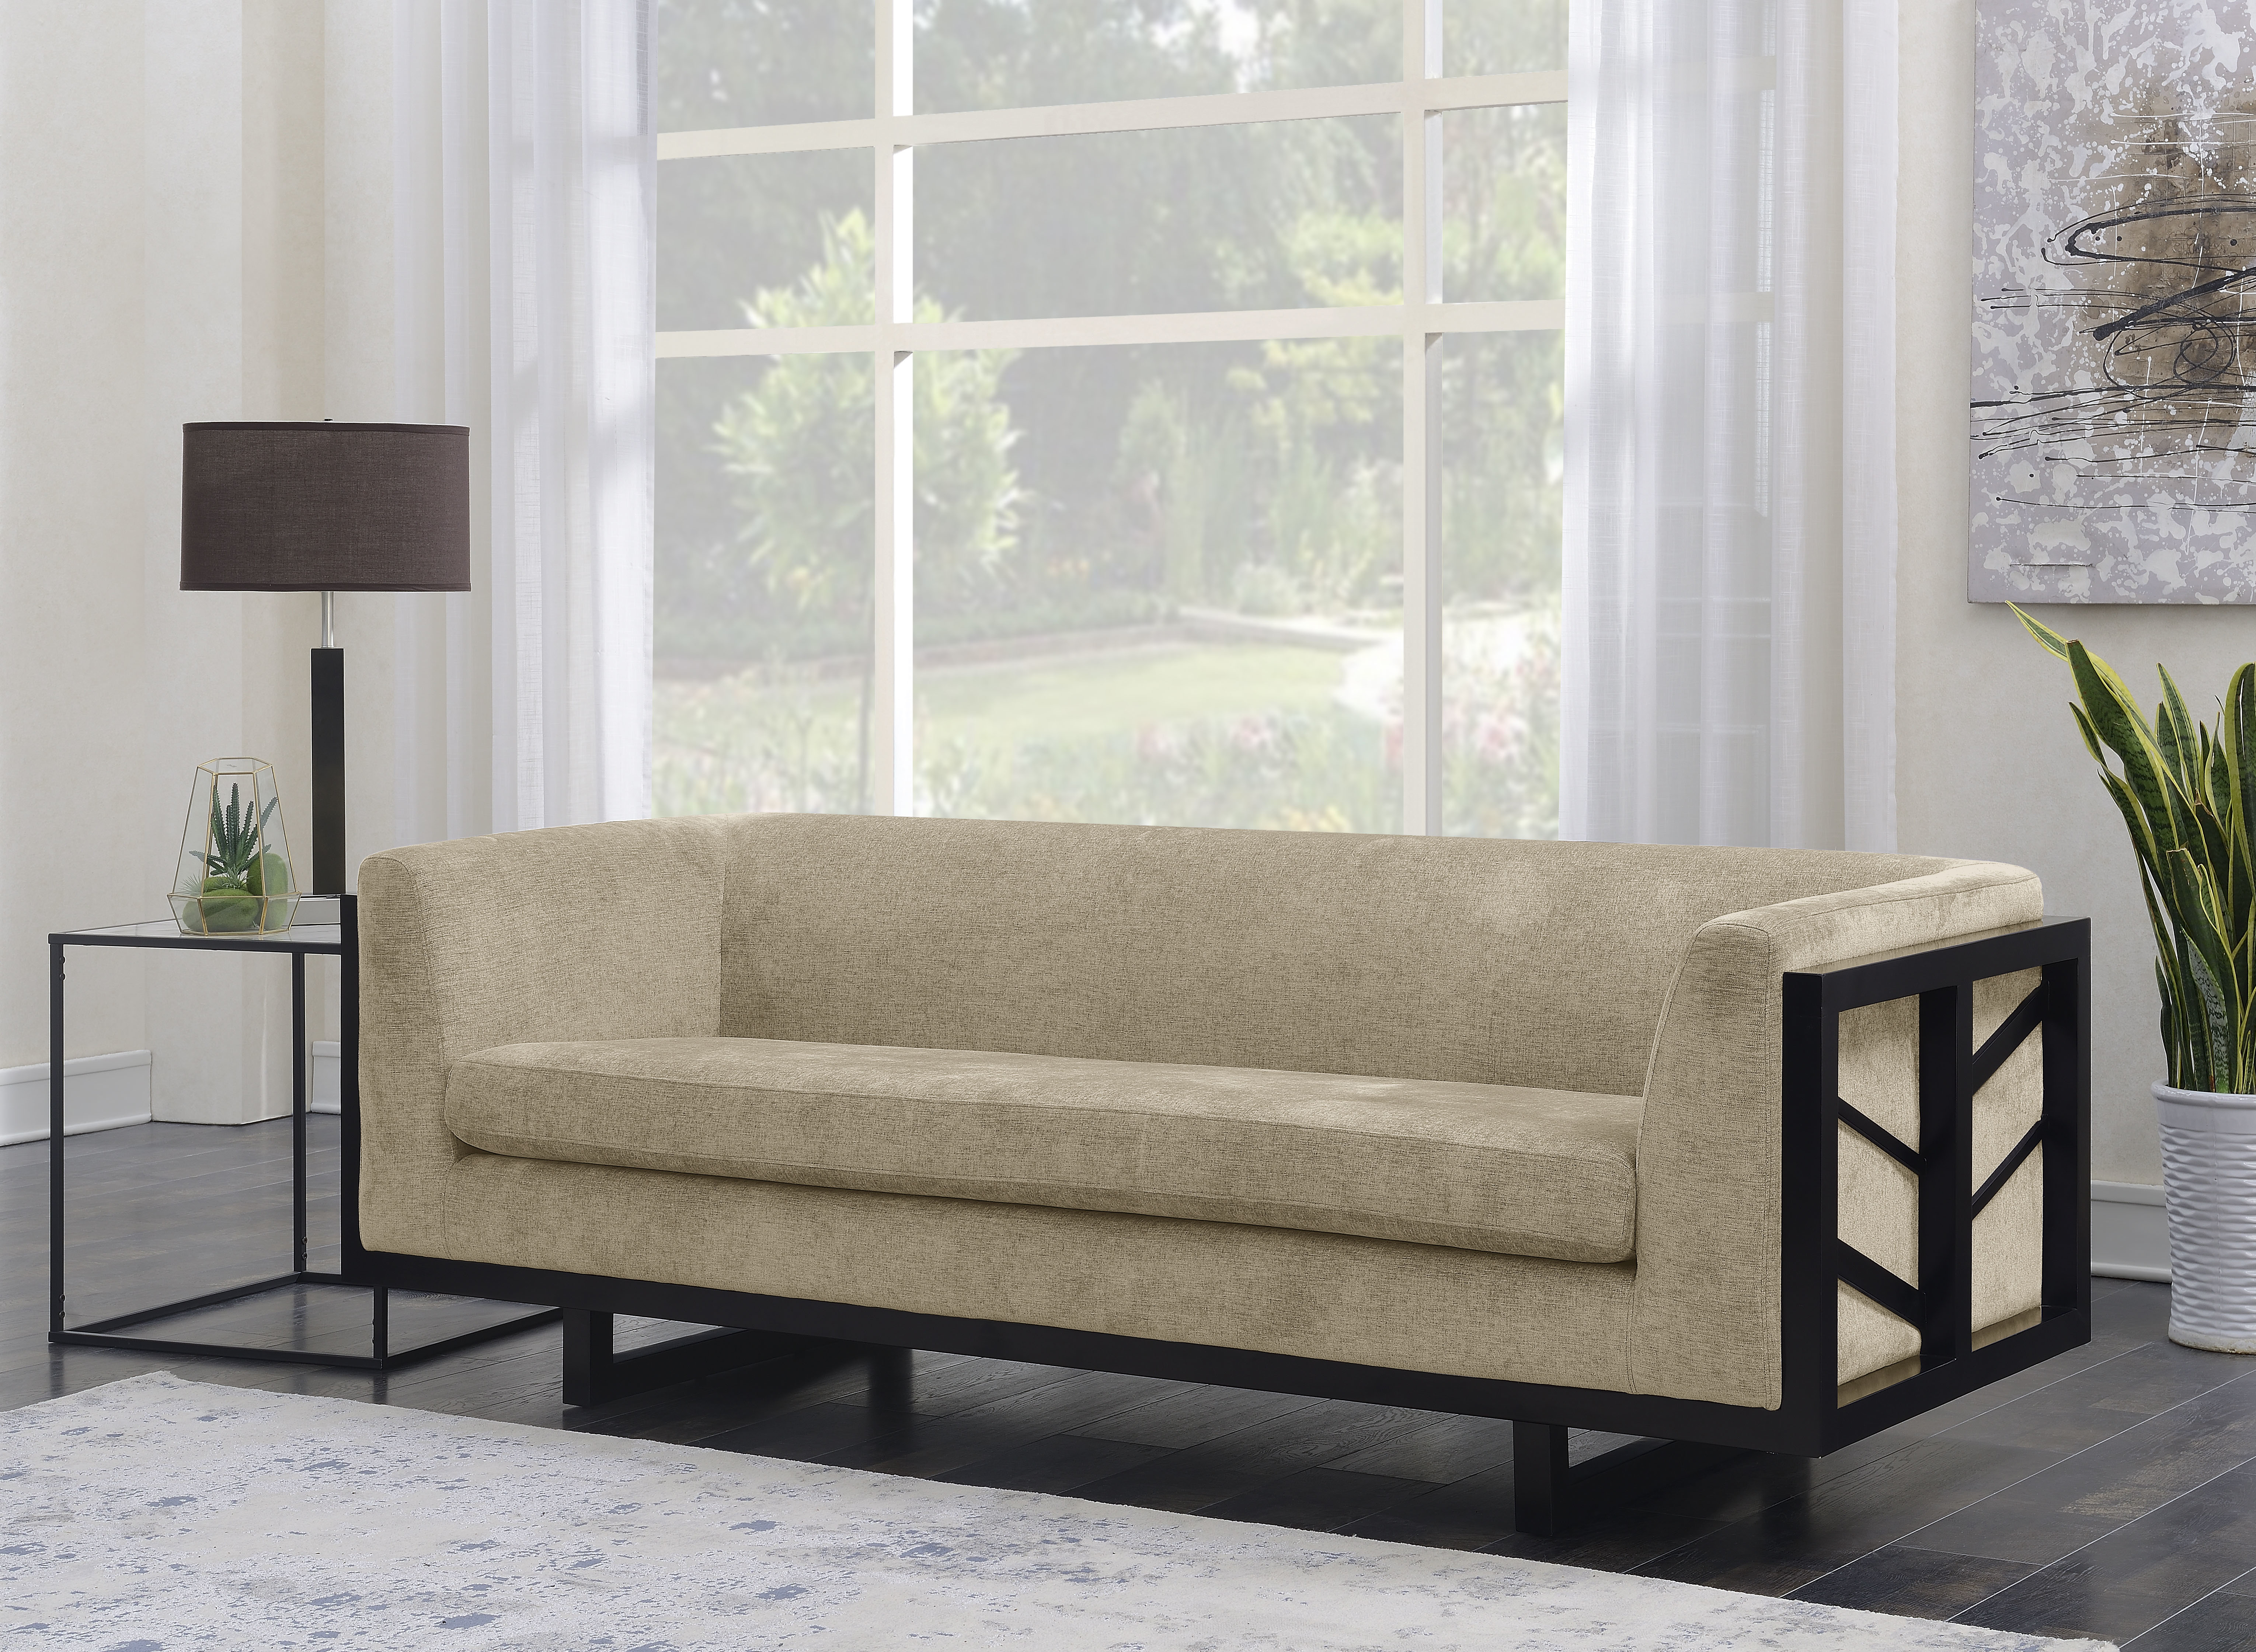 Sofa Linen Textured Upholstery Espresso Lattice Wood